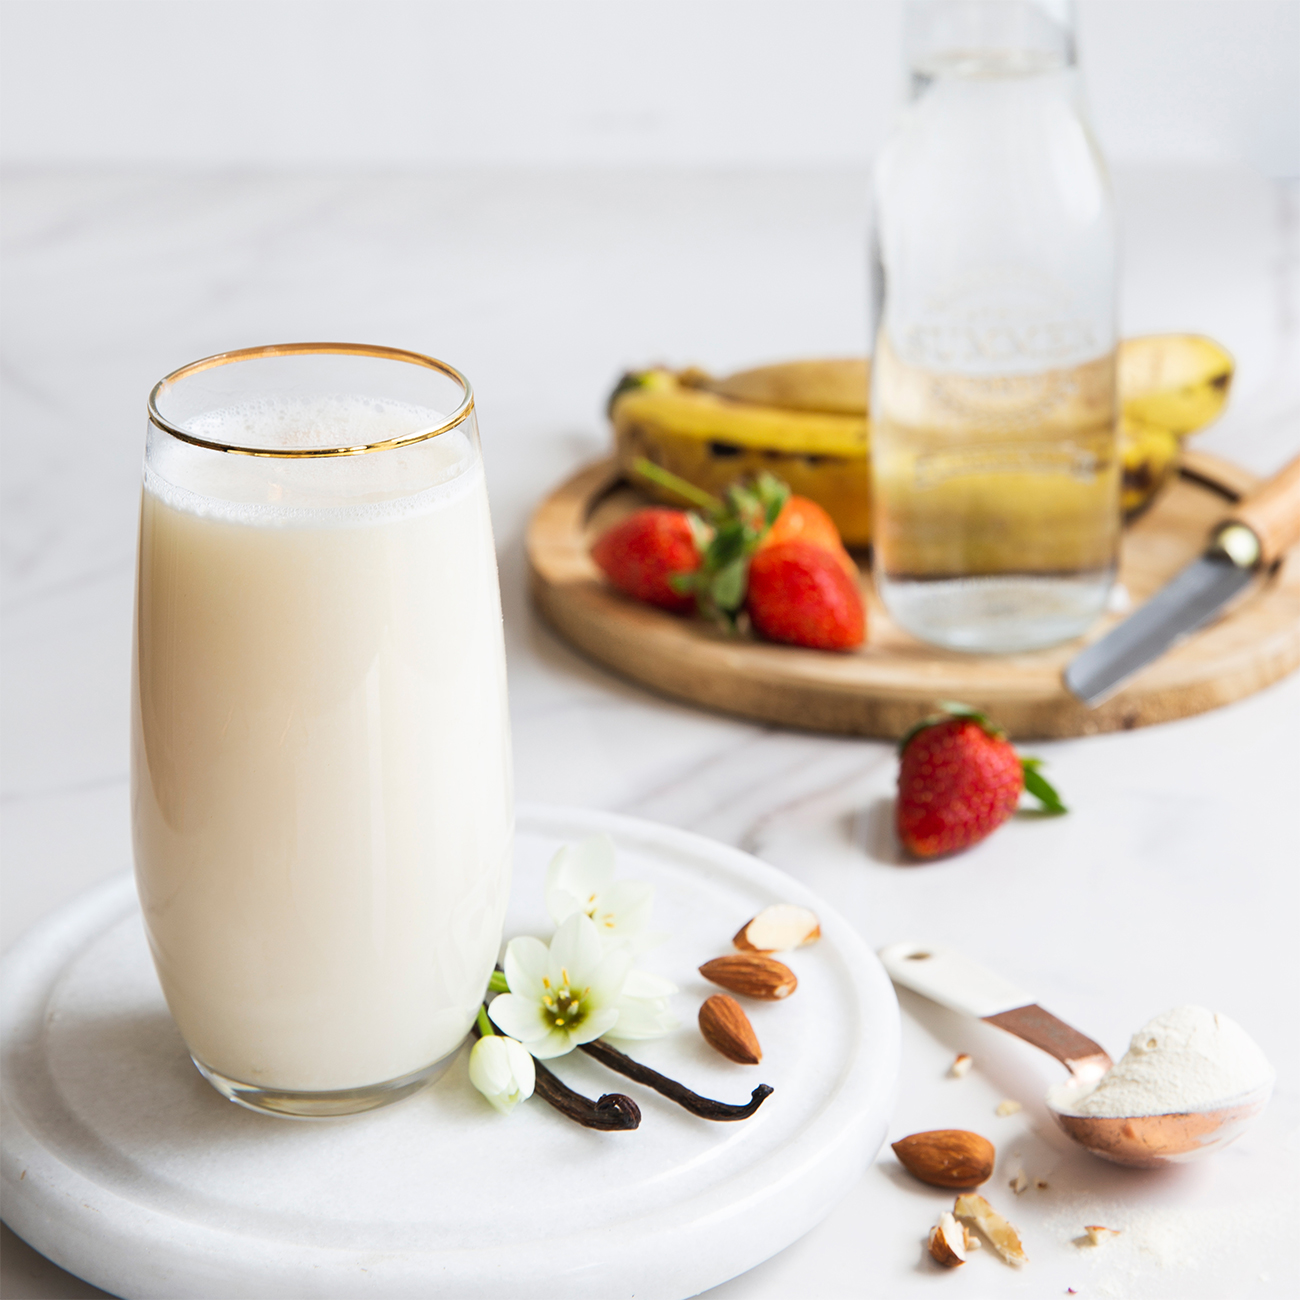 herbalife nutrition proteinski šejk u ukusu vanile u čaši sa svežim voćem i bademom.